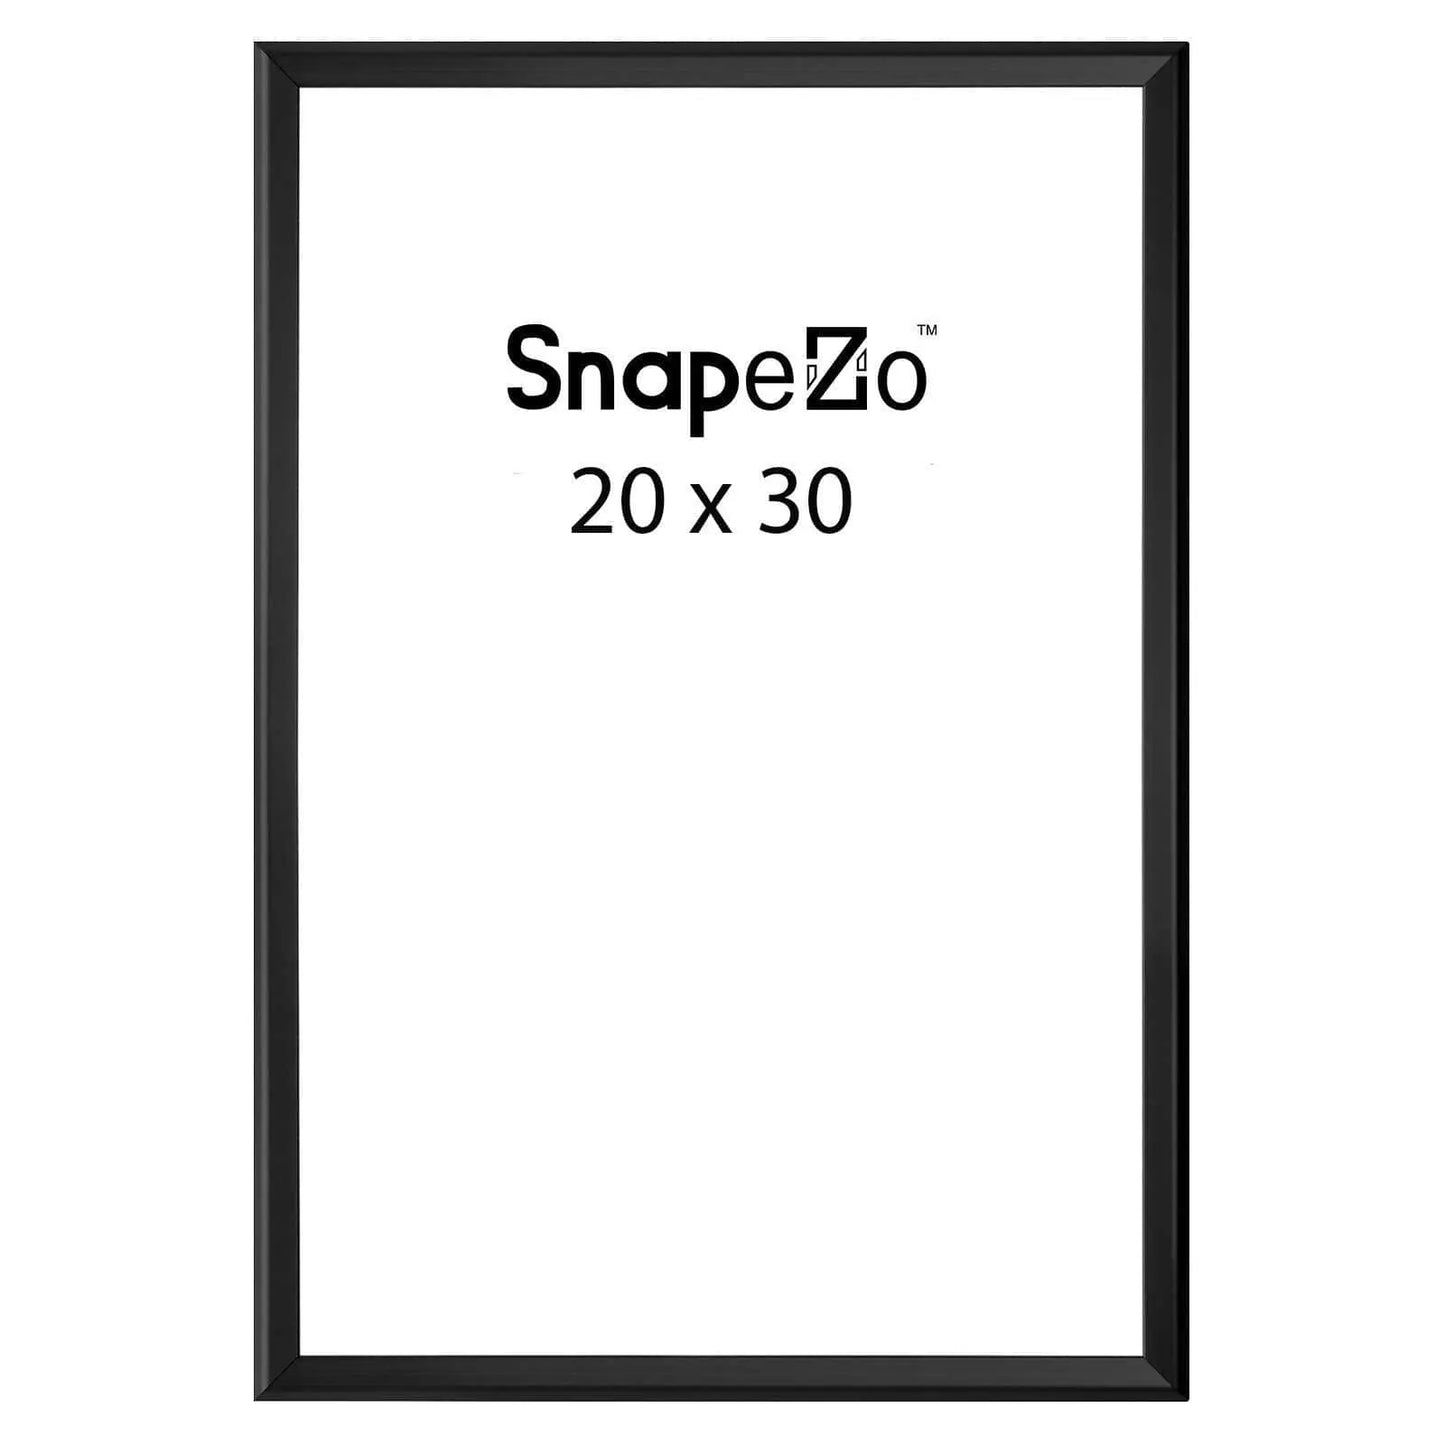 Black locking snap frame poster size 20X30 - 1.25 inch profile - Snap Frames Direct